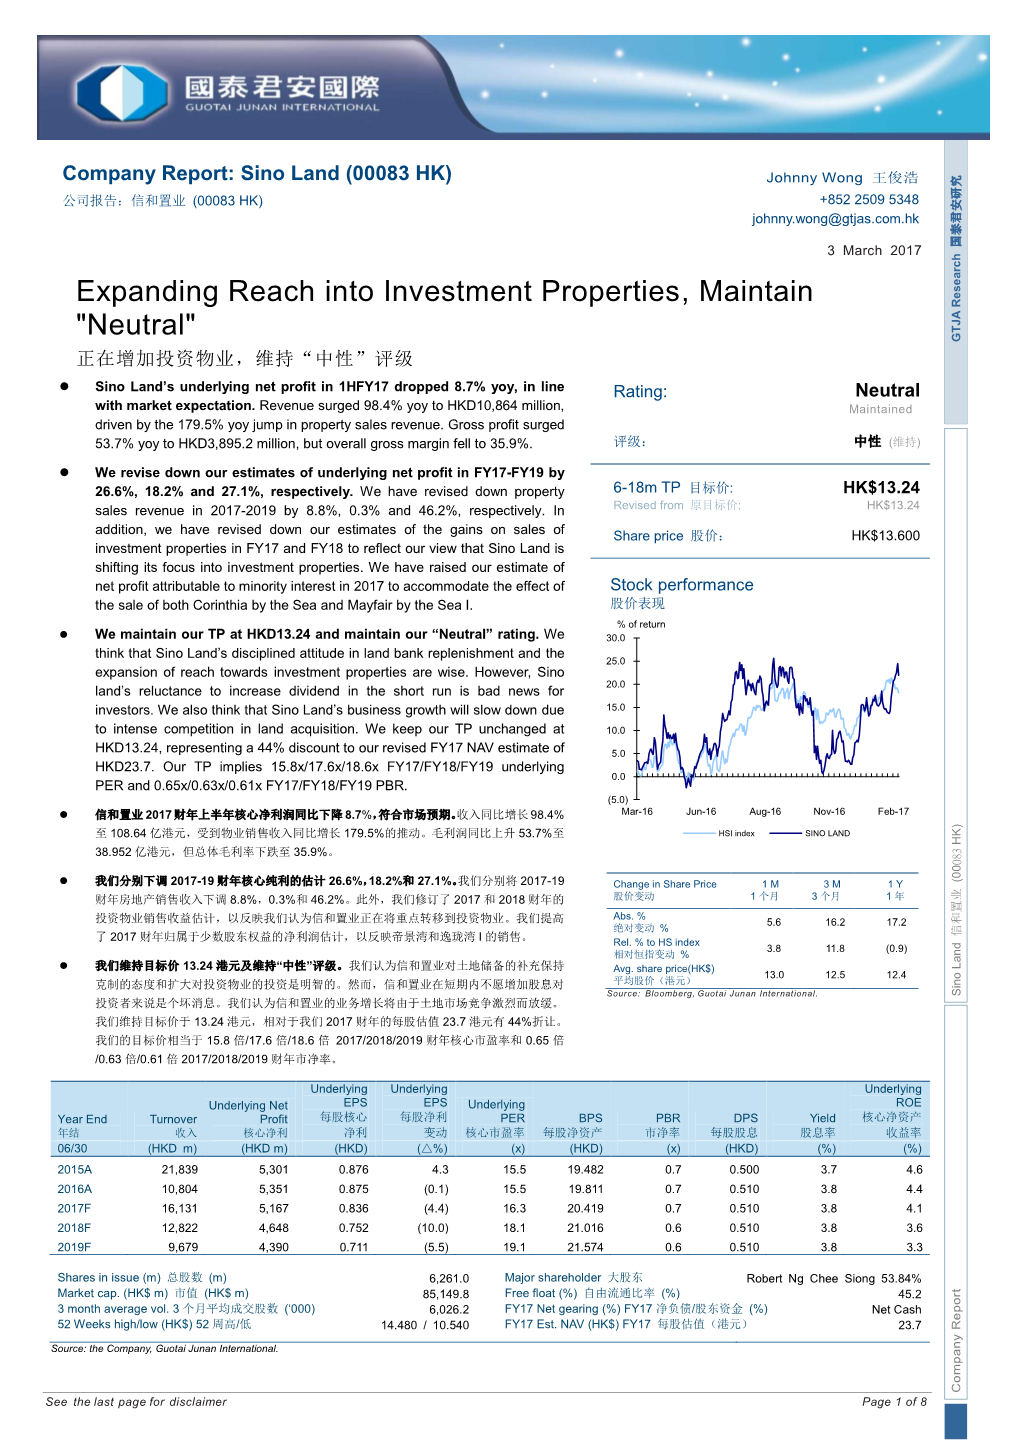 Company Report: Hang Lung Properties (00101